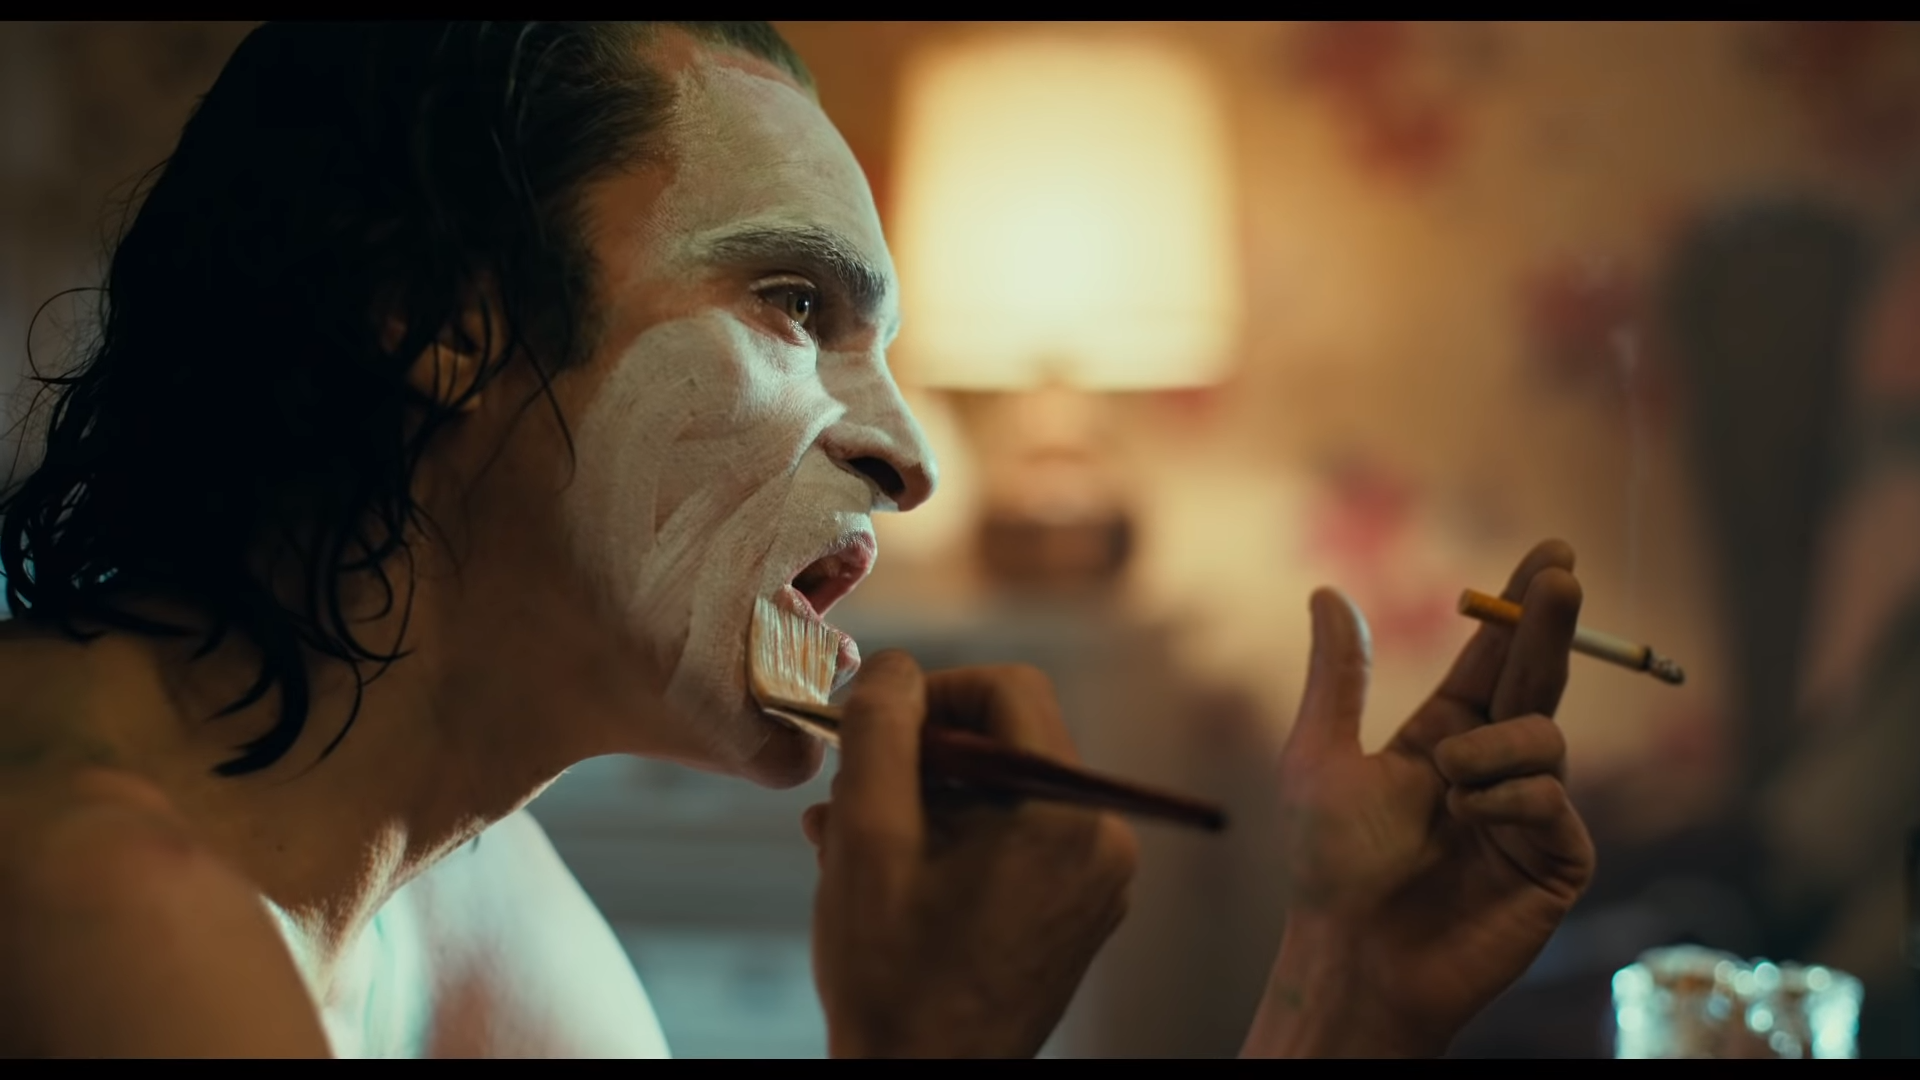 People 1920x1080 Joker Joaquin Phoenix movie poster face paint Joker (2019 Movie) actor men